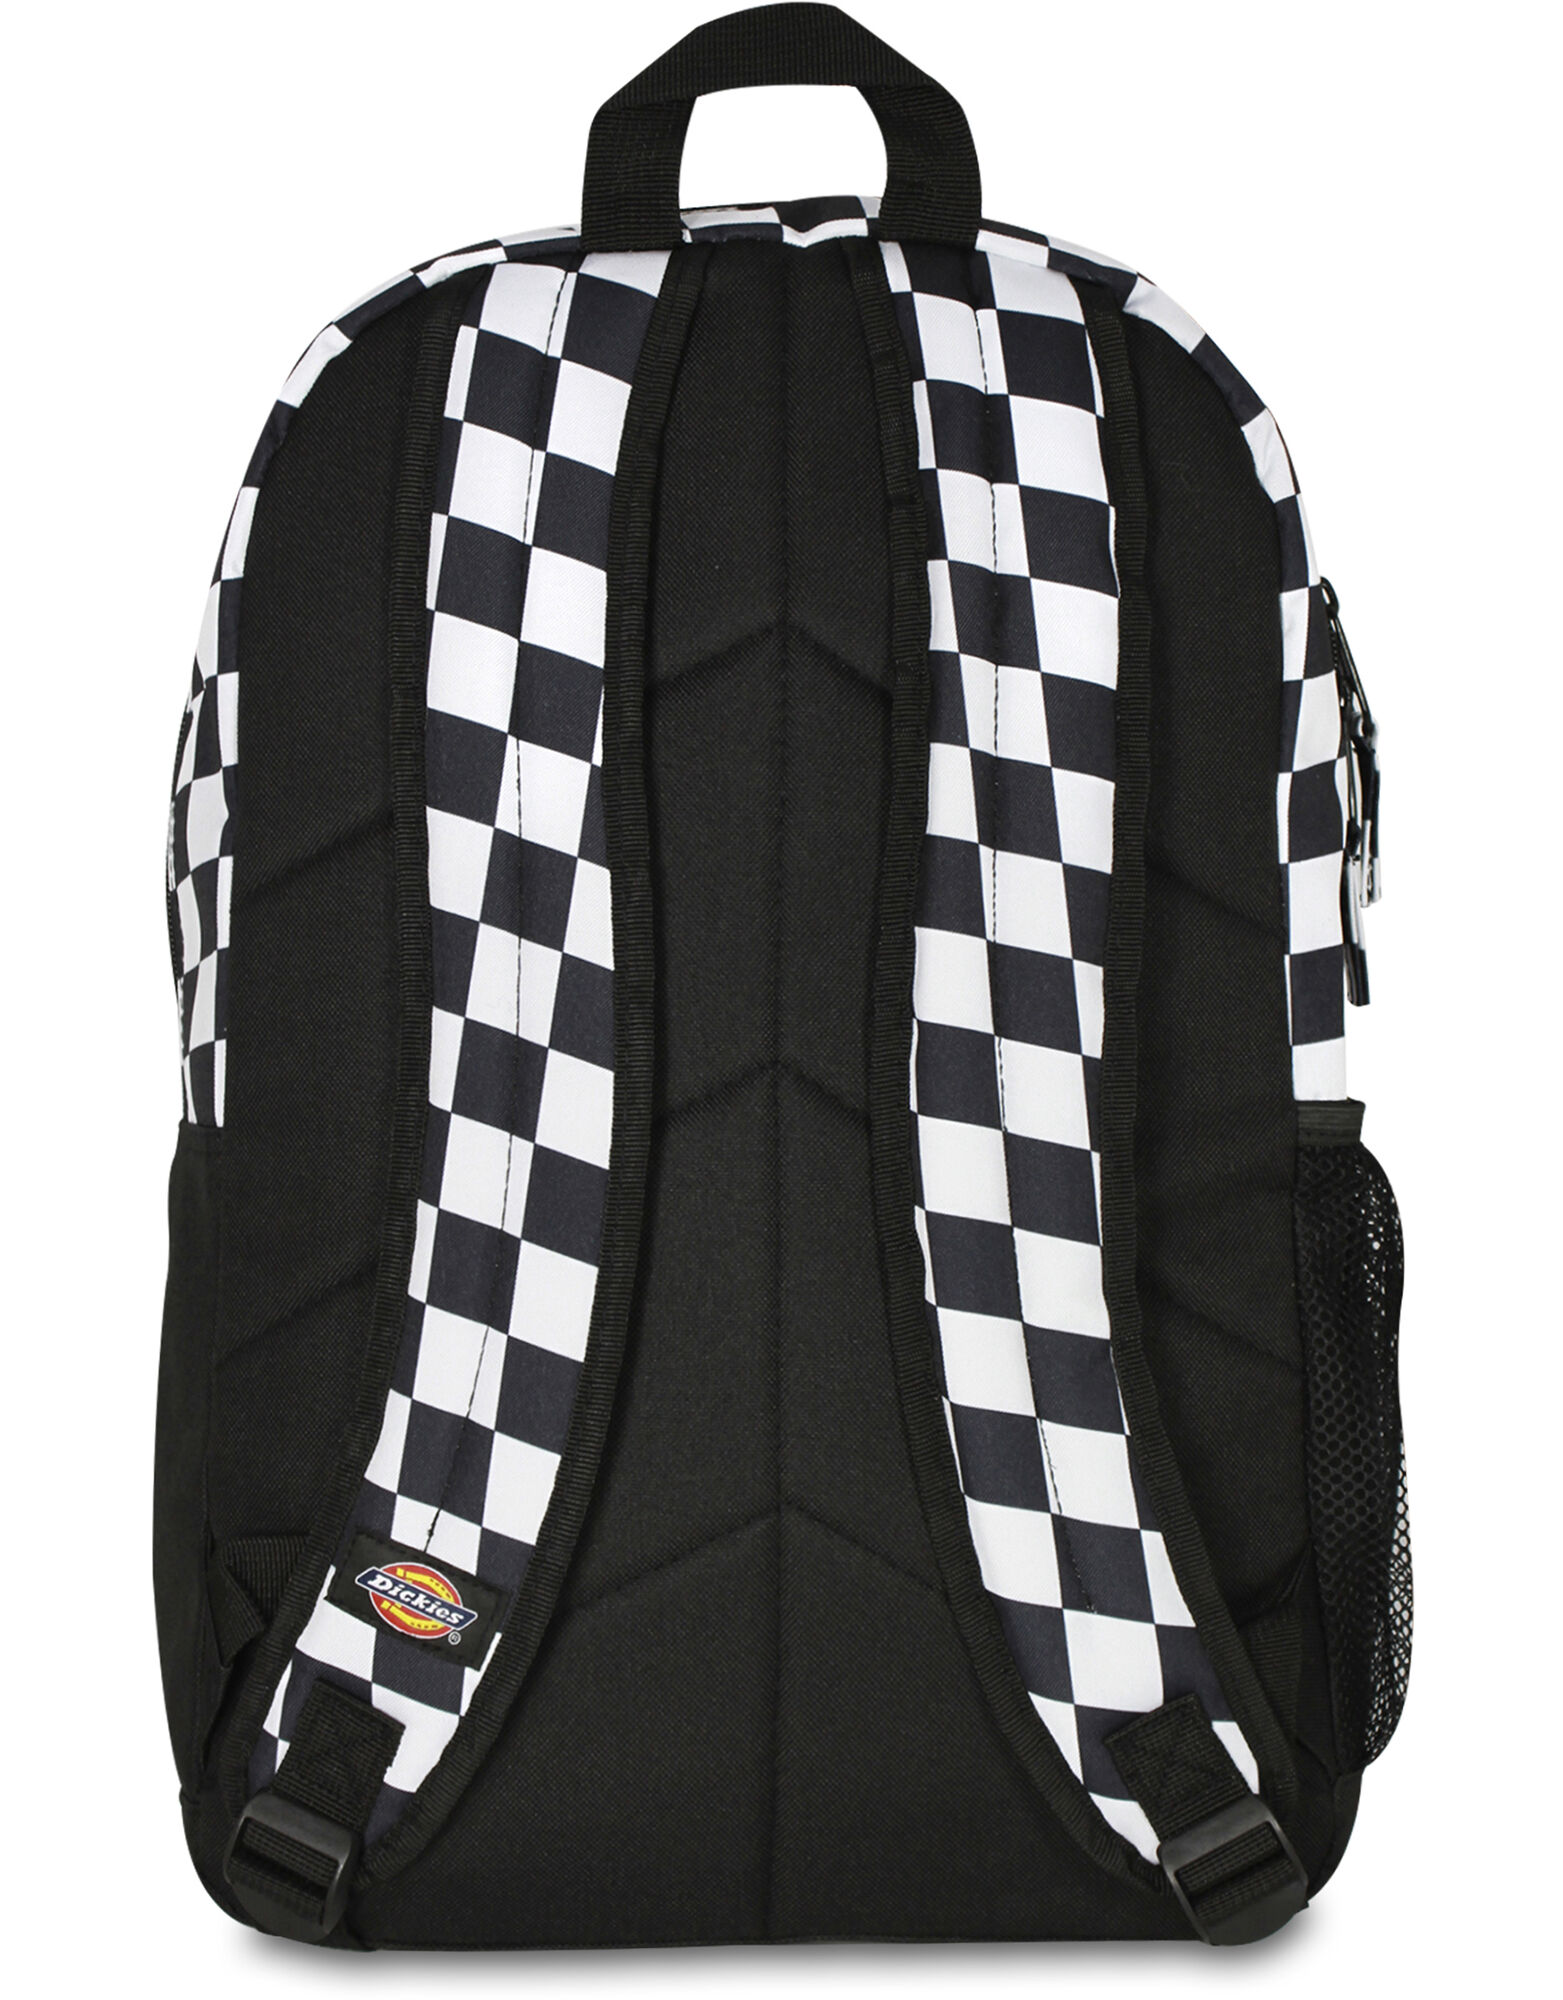 Black/White Checkered Study Hall Backpack Black White Checkered | Accessories Bags Backpacks ...